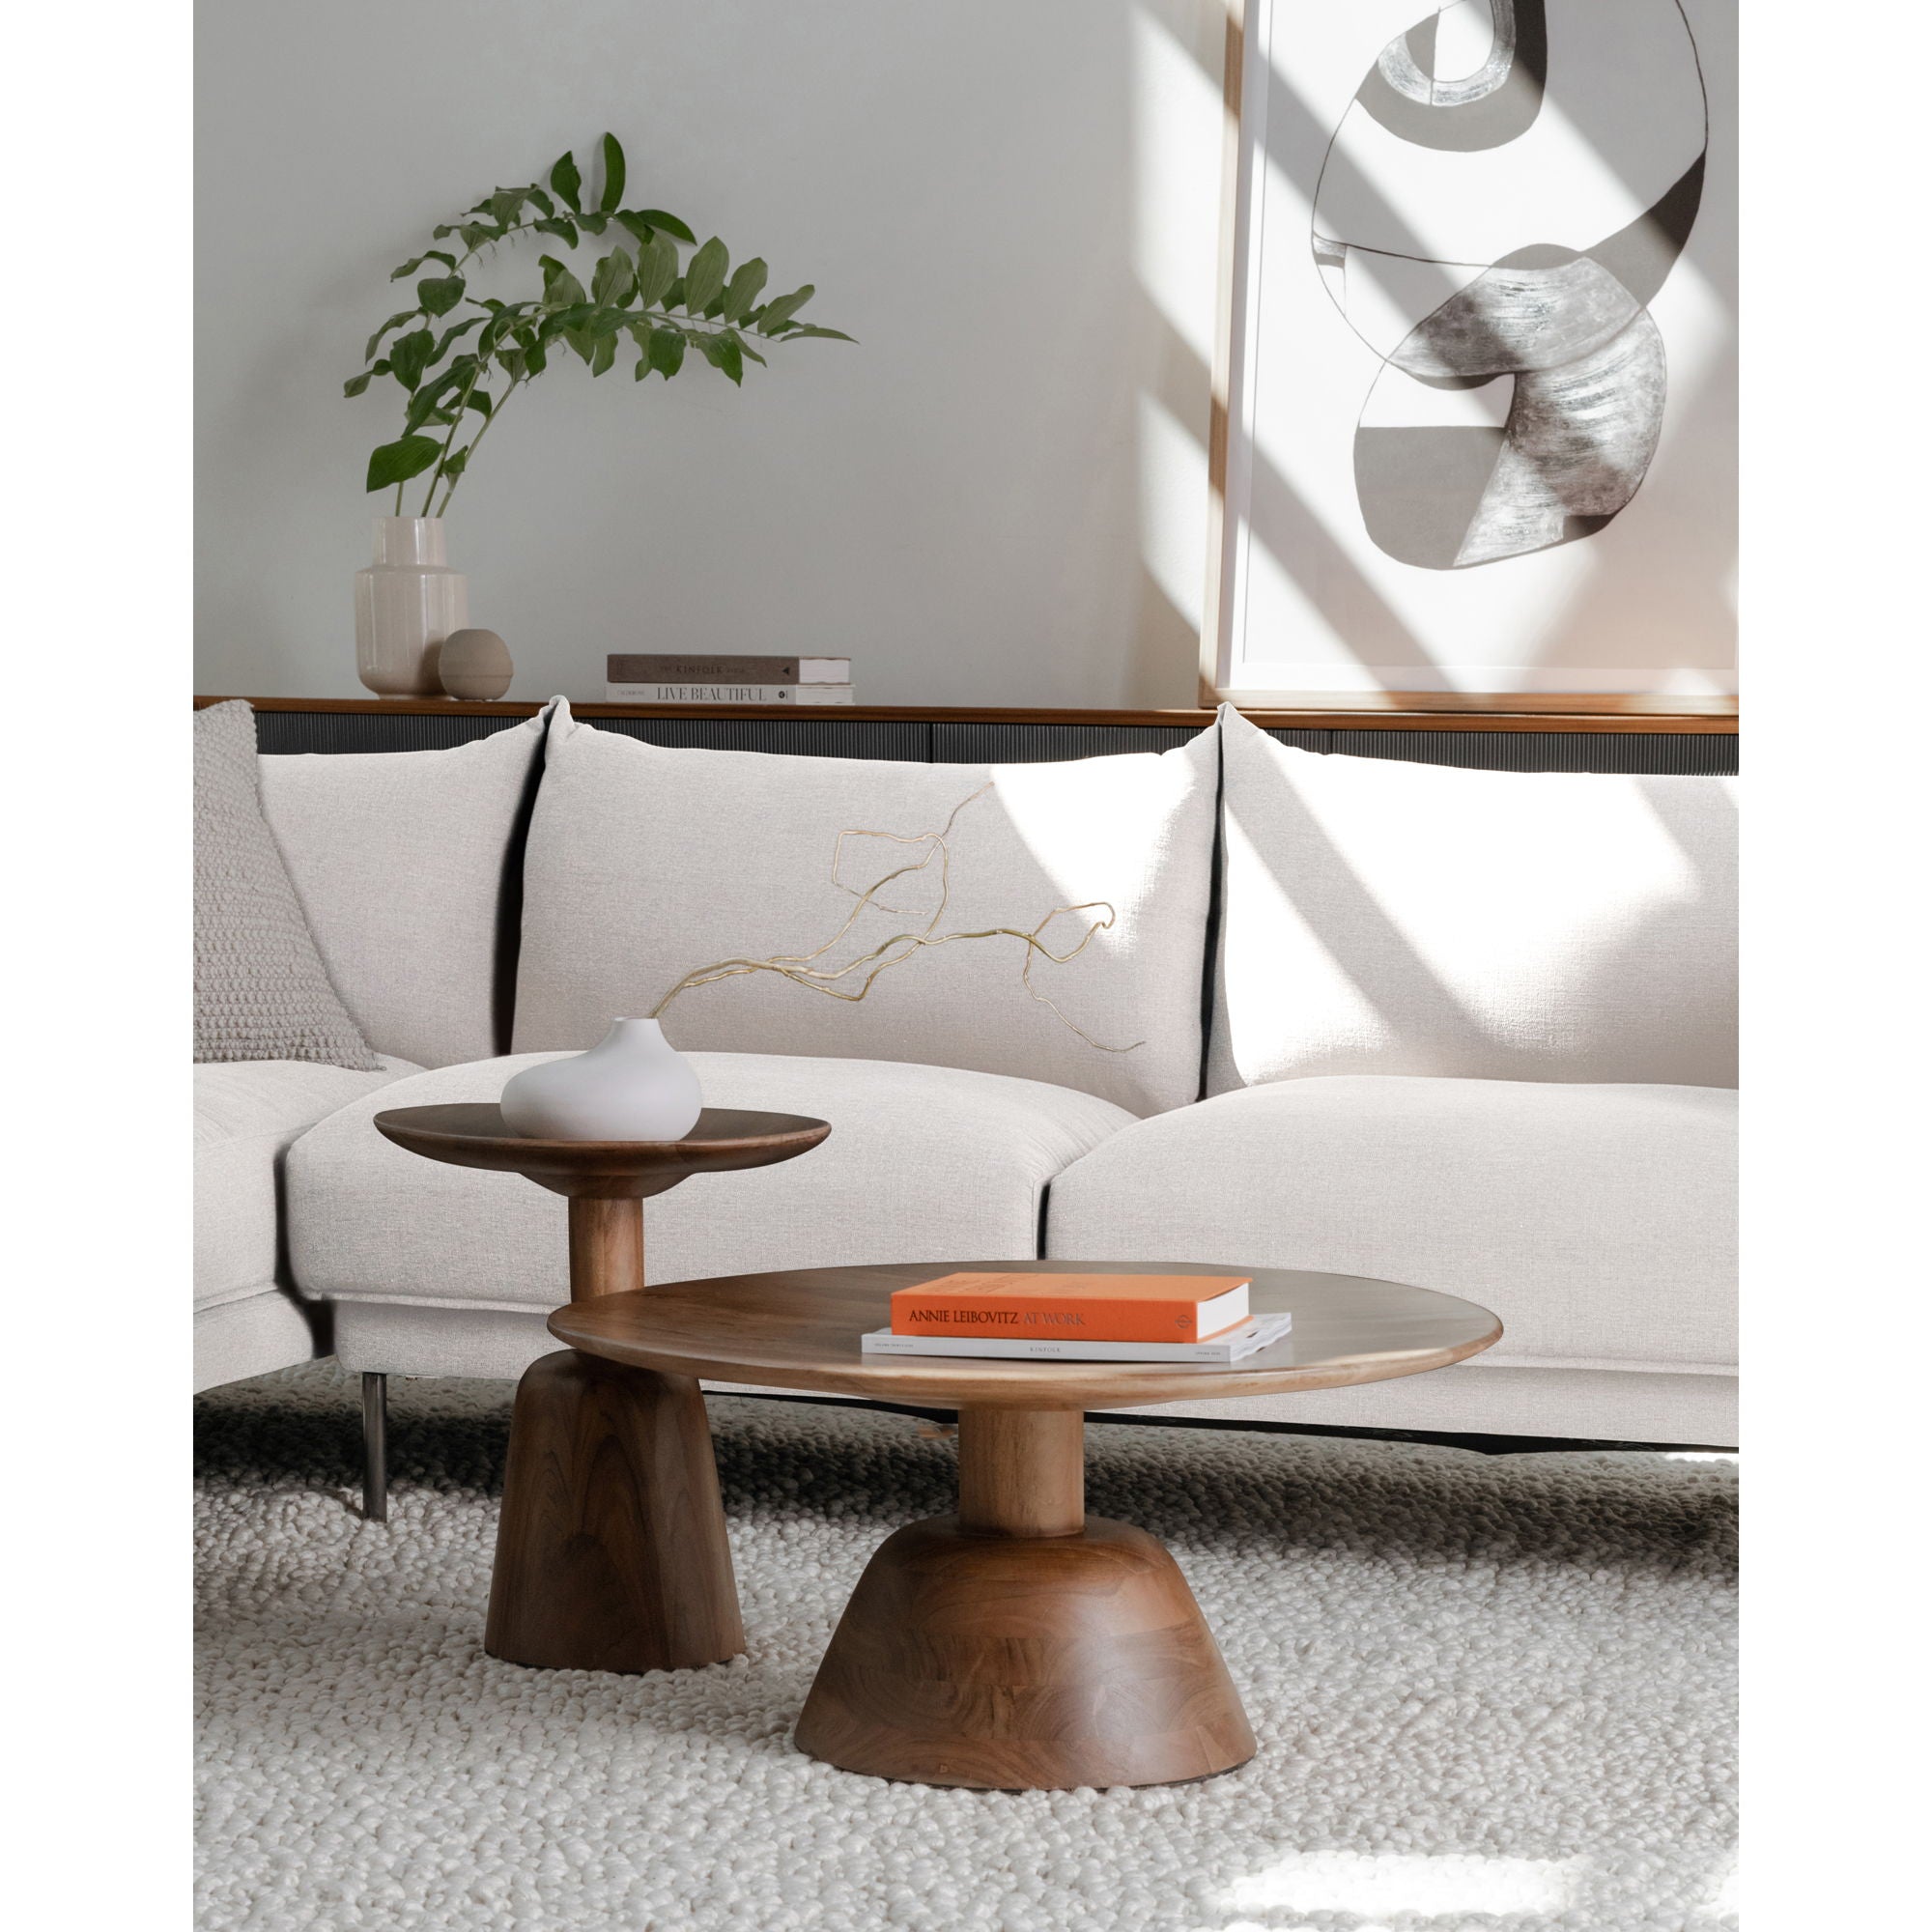 Jamara Linen Beige Sectional - Left-Facing, Deep Seats-Stationary Sectionals-American Furniture Outlet